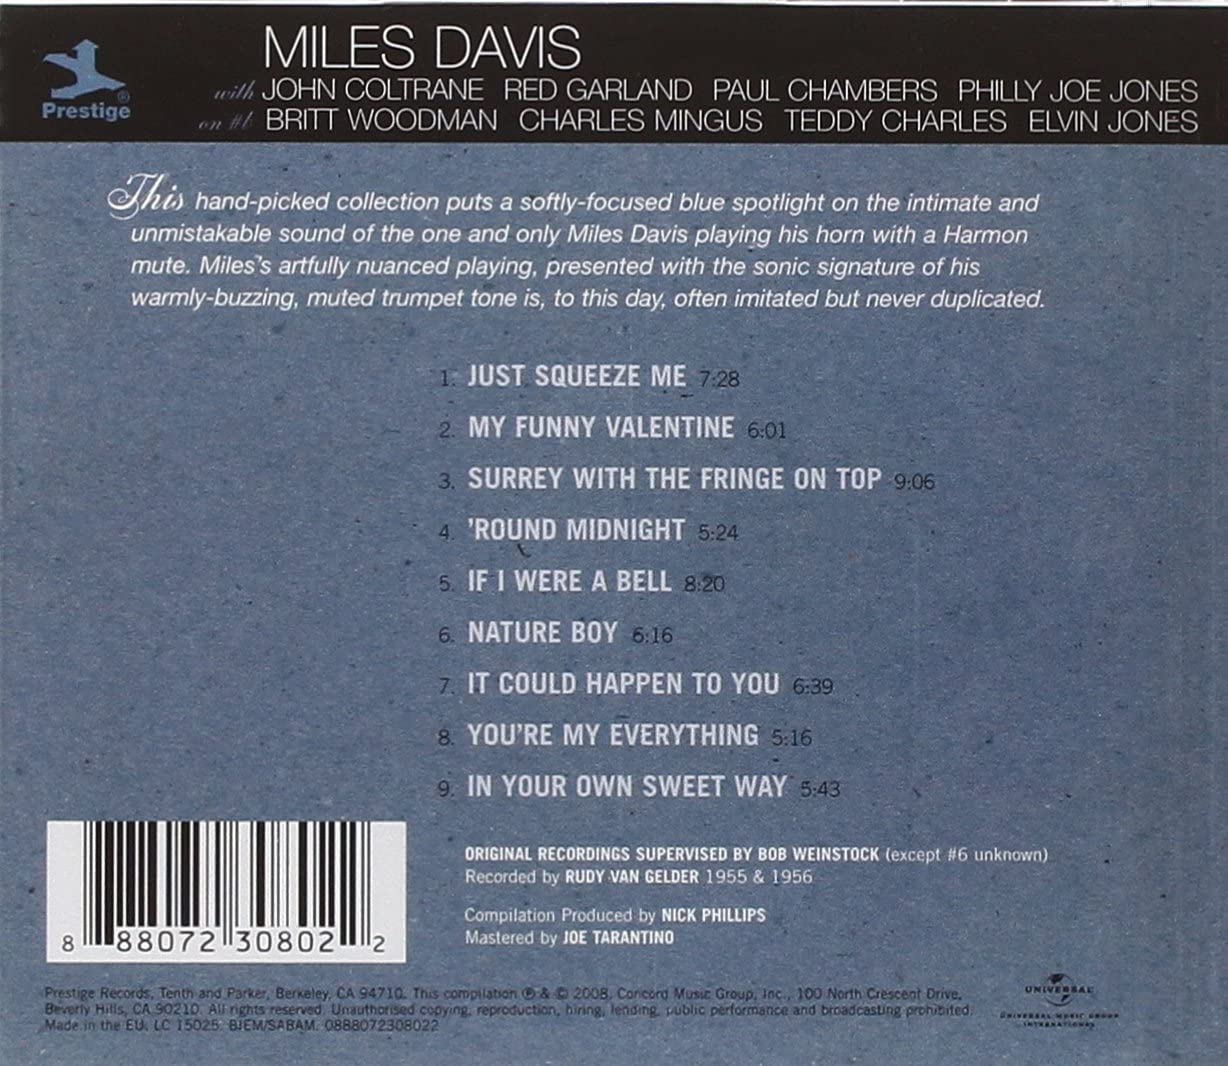 Miles Davis – Muted Miles - USED CD